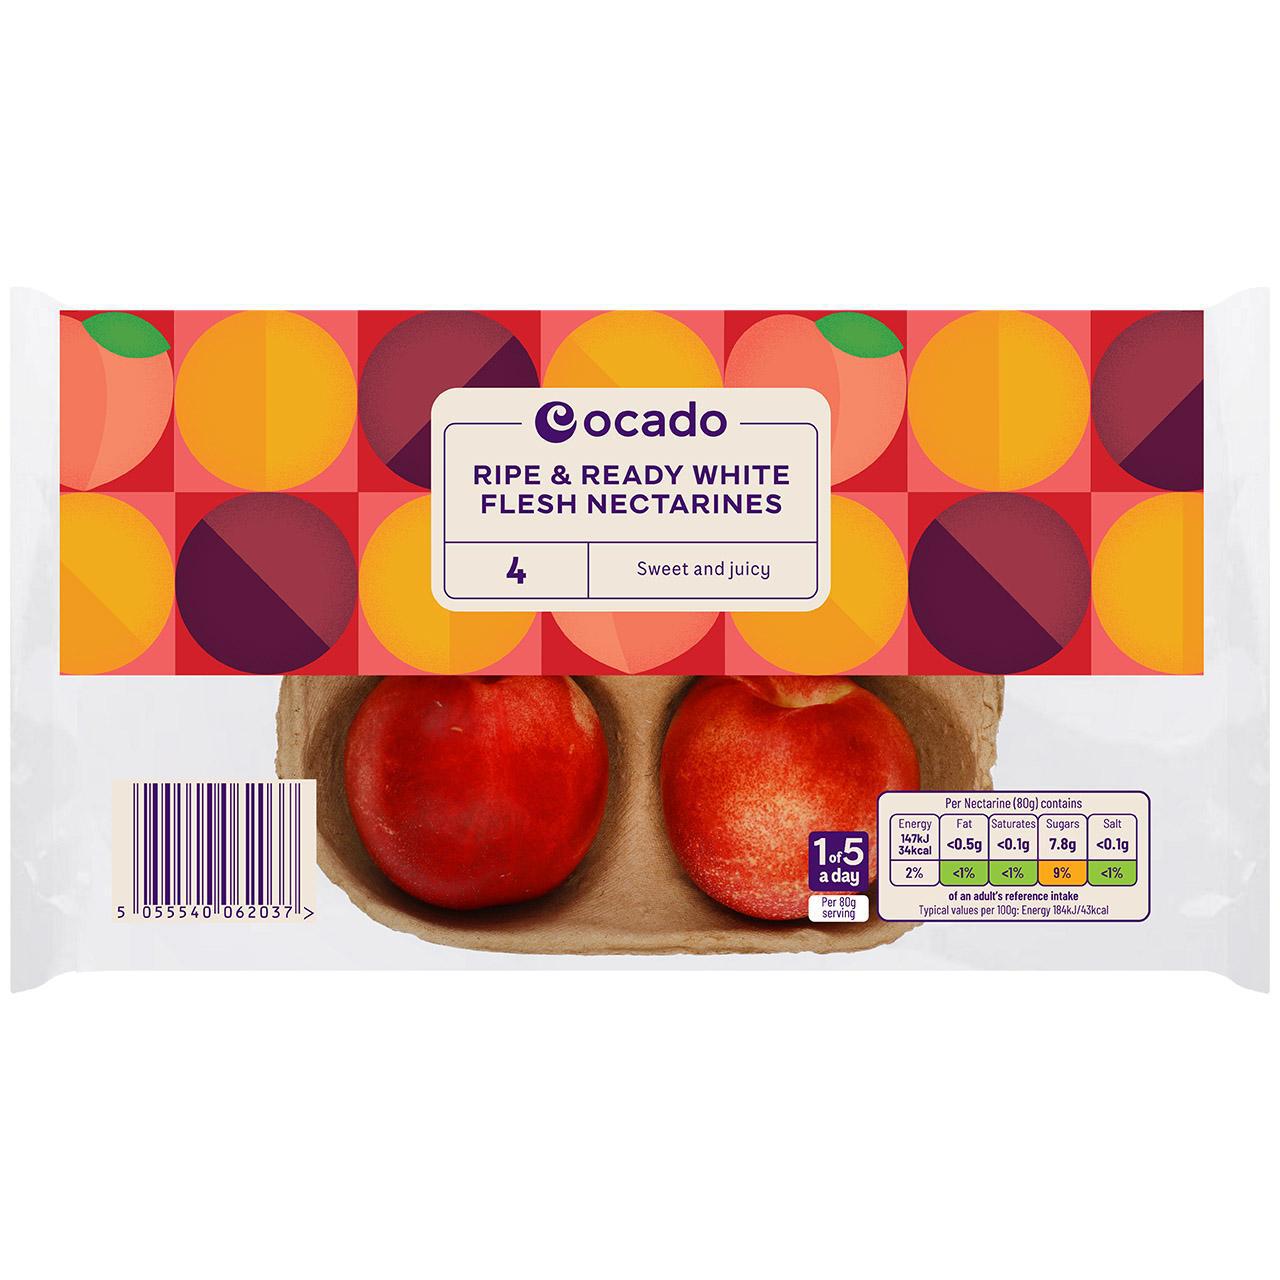 Ocado Ripe & Ready White Nectarines 4 per pack